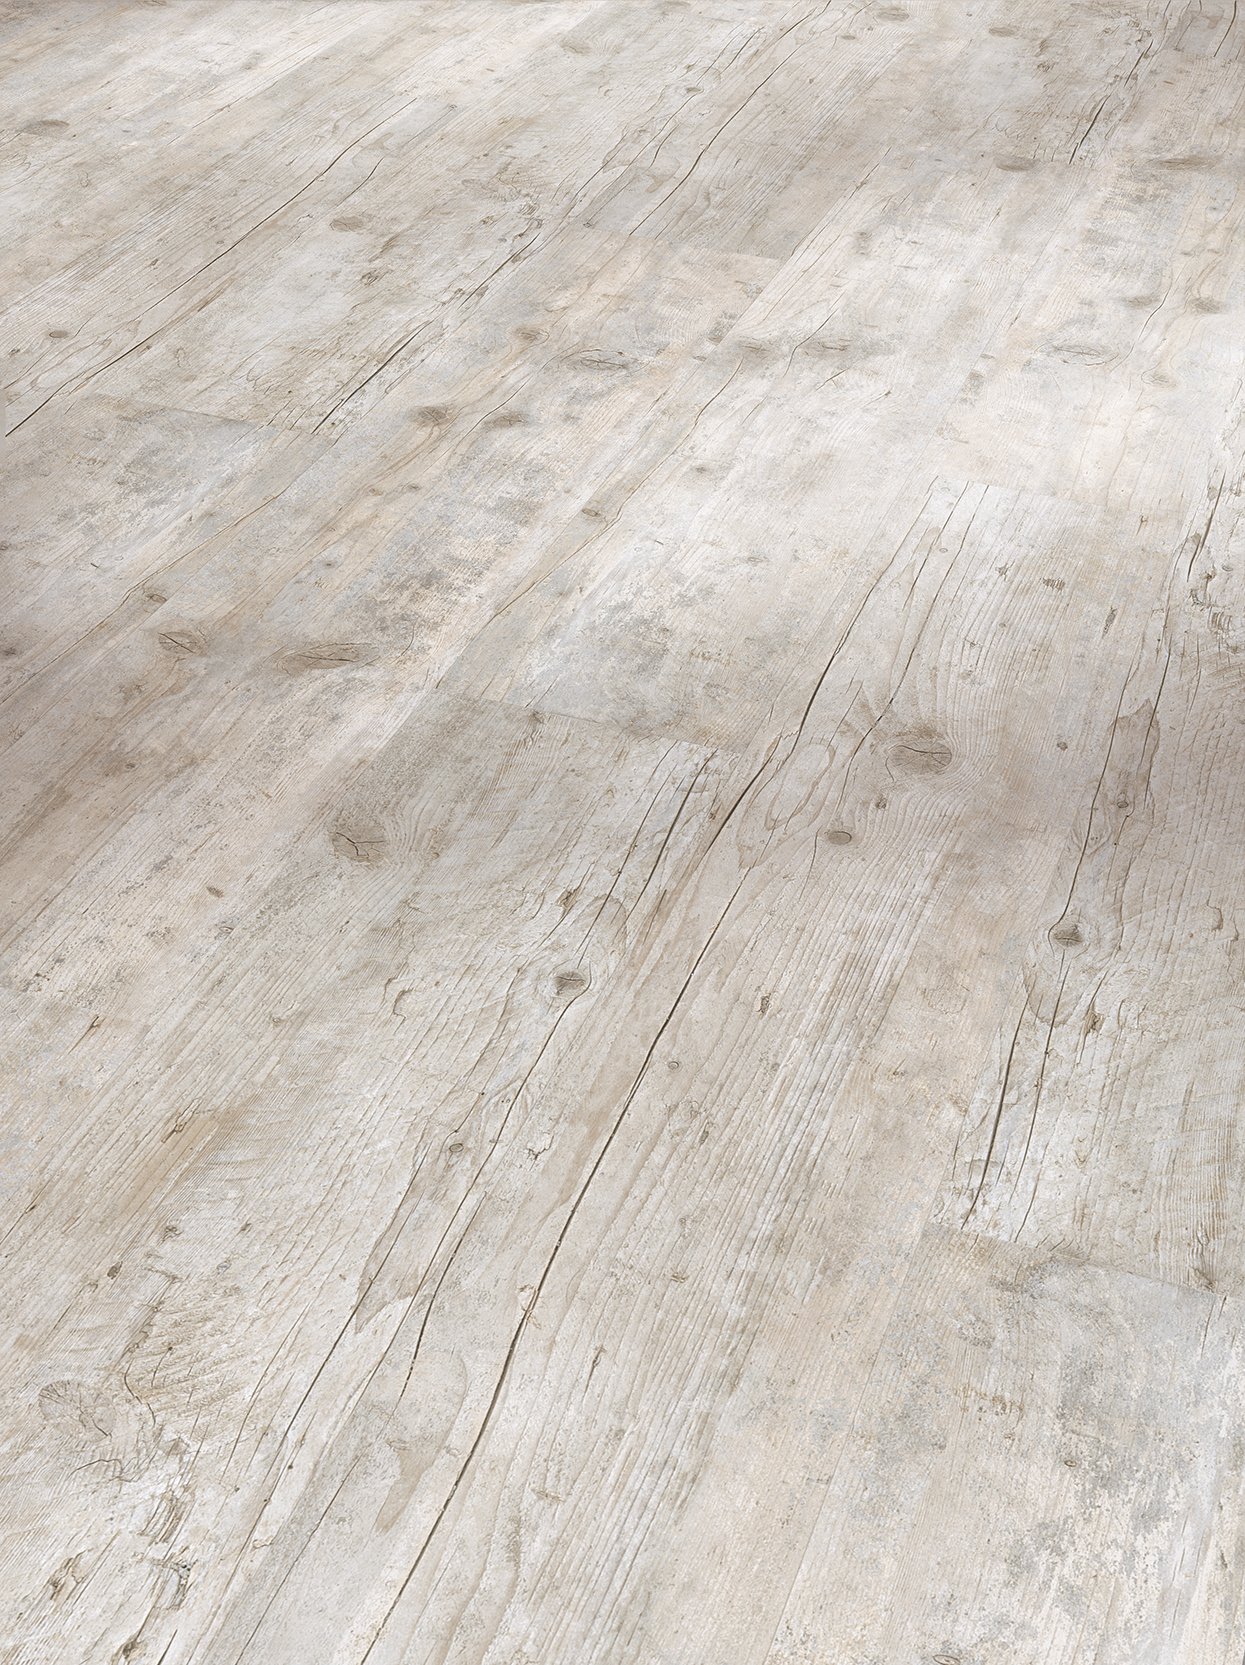 Parador klick Vinyl Bodenbelag Classic 2030 Altholz geweißt Landhausdiele Holzstruktur 1,825m², hochwertige Holzoptik hell grau/weiß 9,6mm, einfache Verlegung